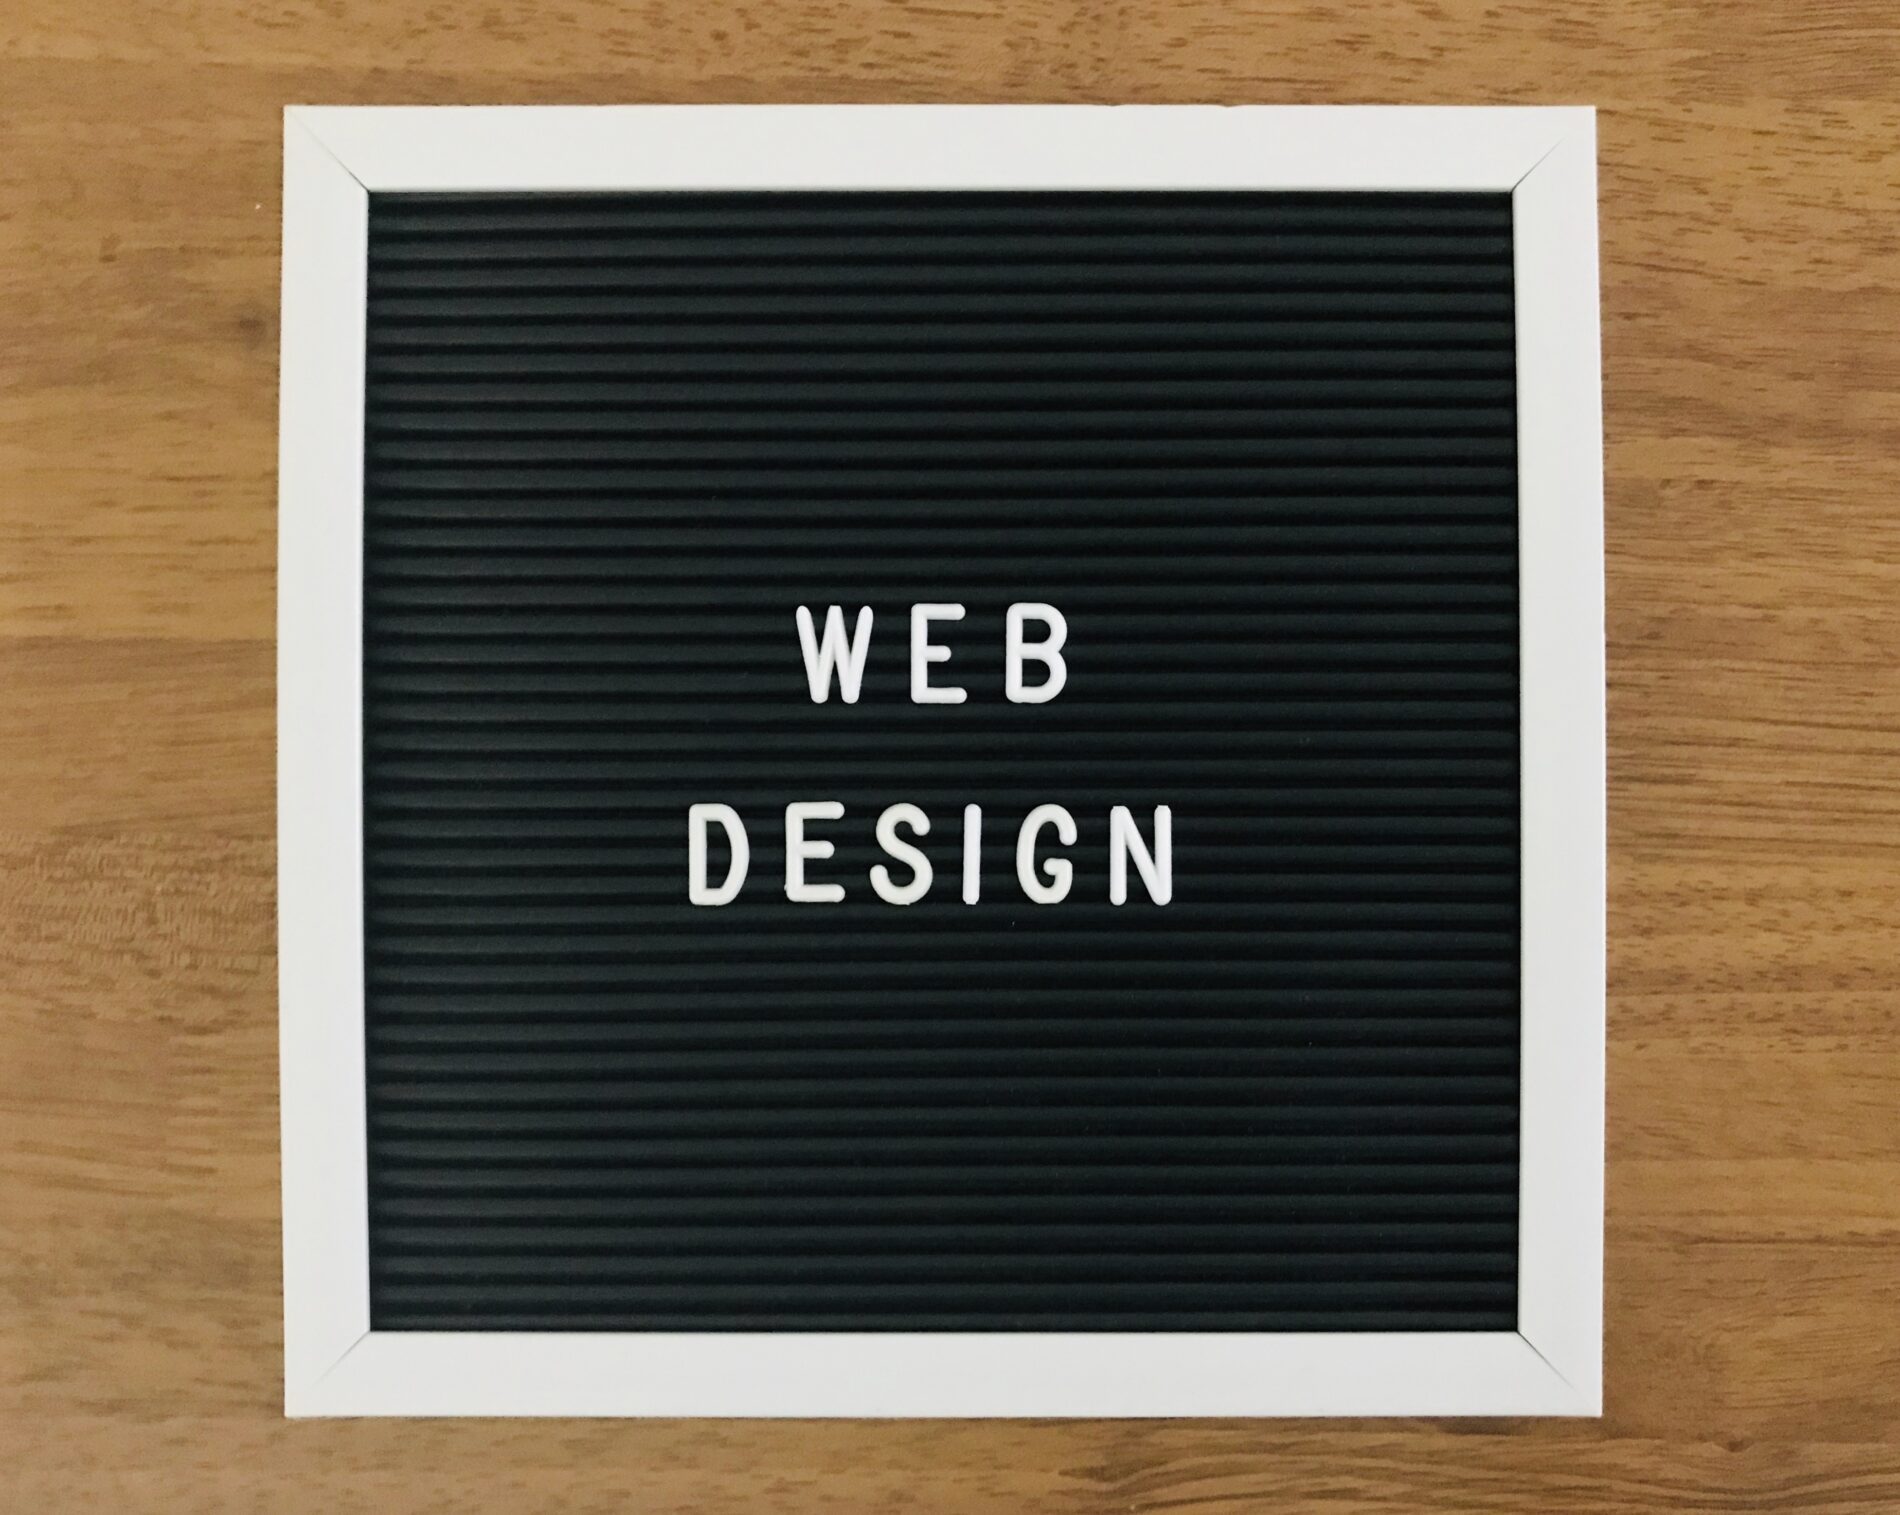 Best Website Design Company In Dallas